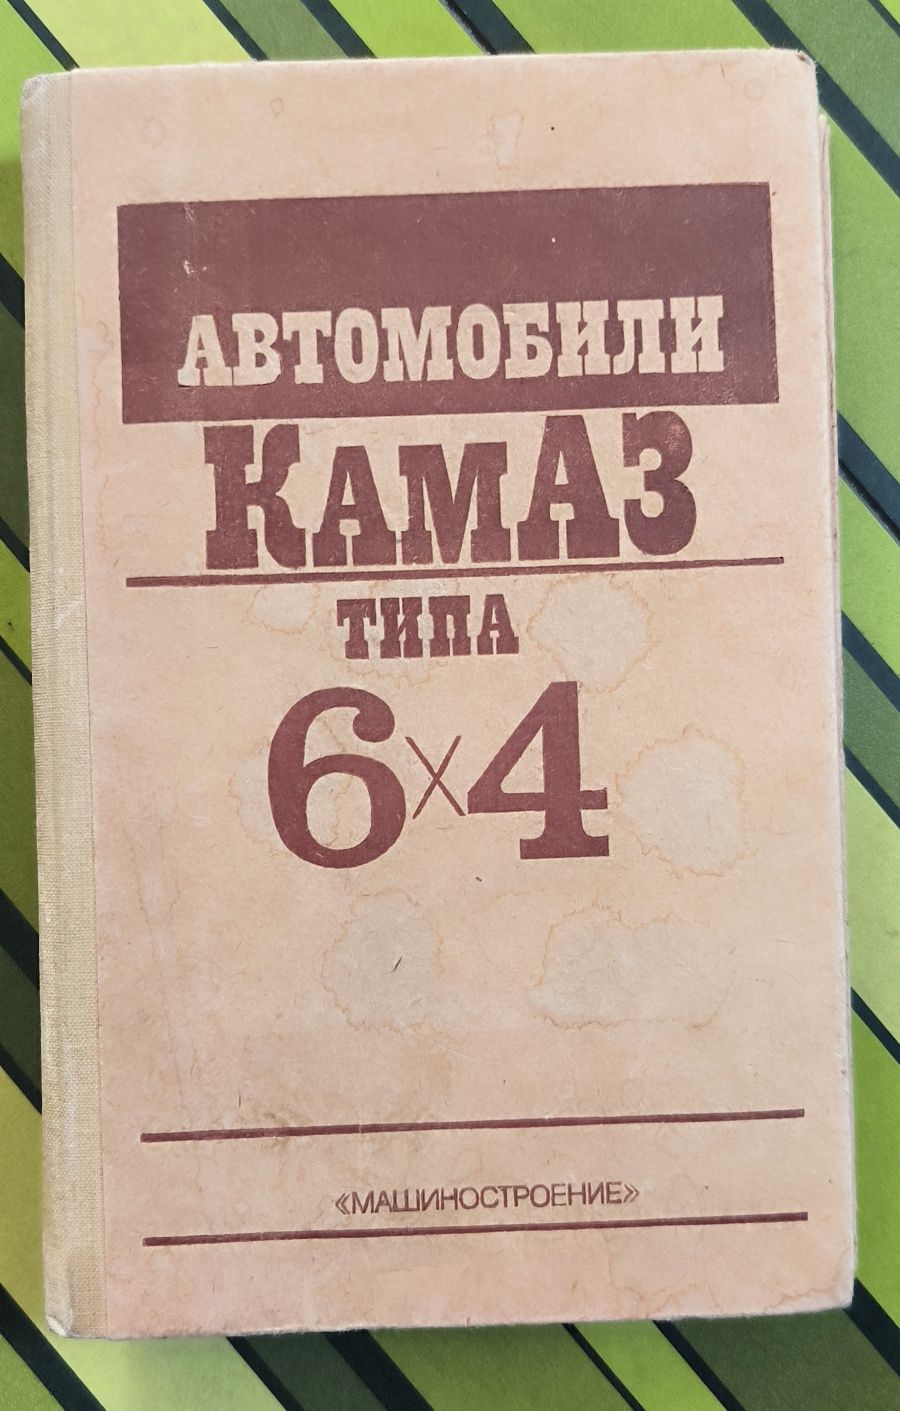 Руководство по эксплуатации автомобилей КАМАЗ 6Х4